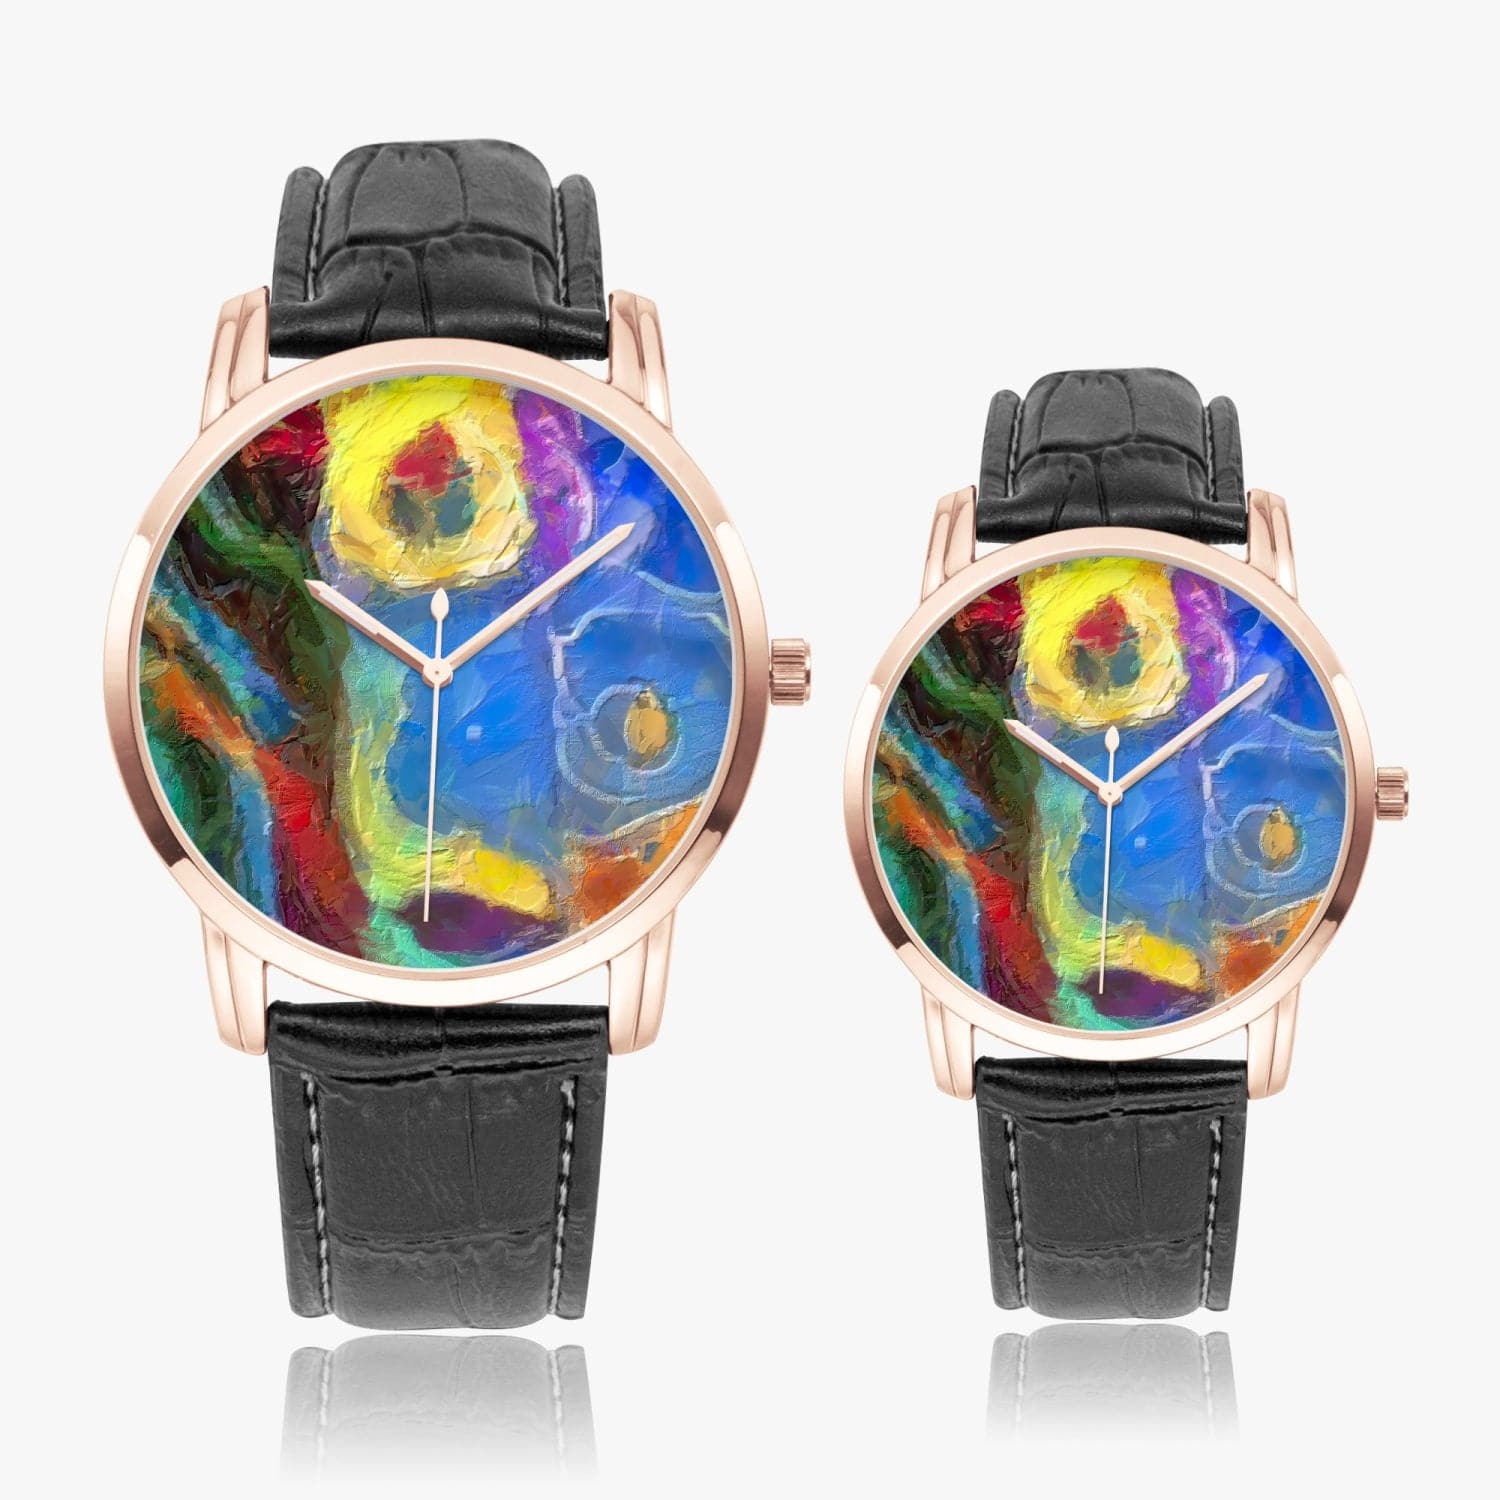 Art in Blue Minor - Wide Type Quartz watch, designed by Sensus Studio Design